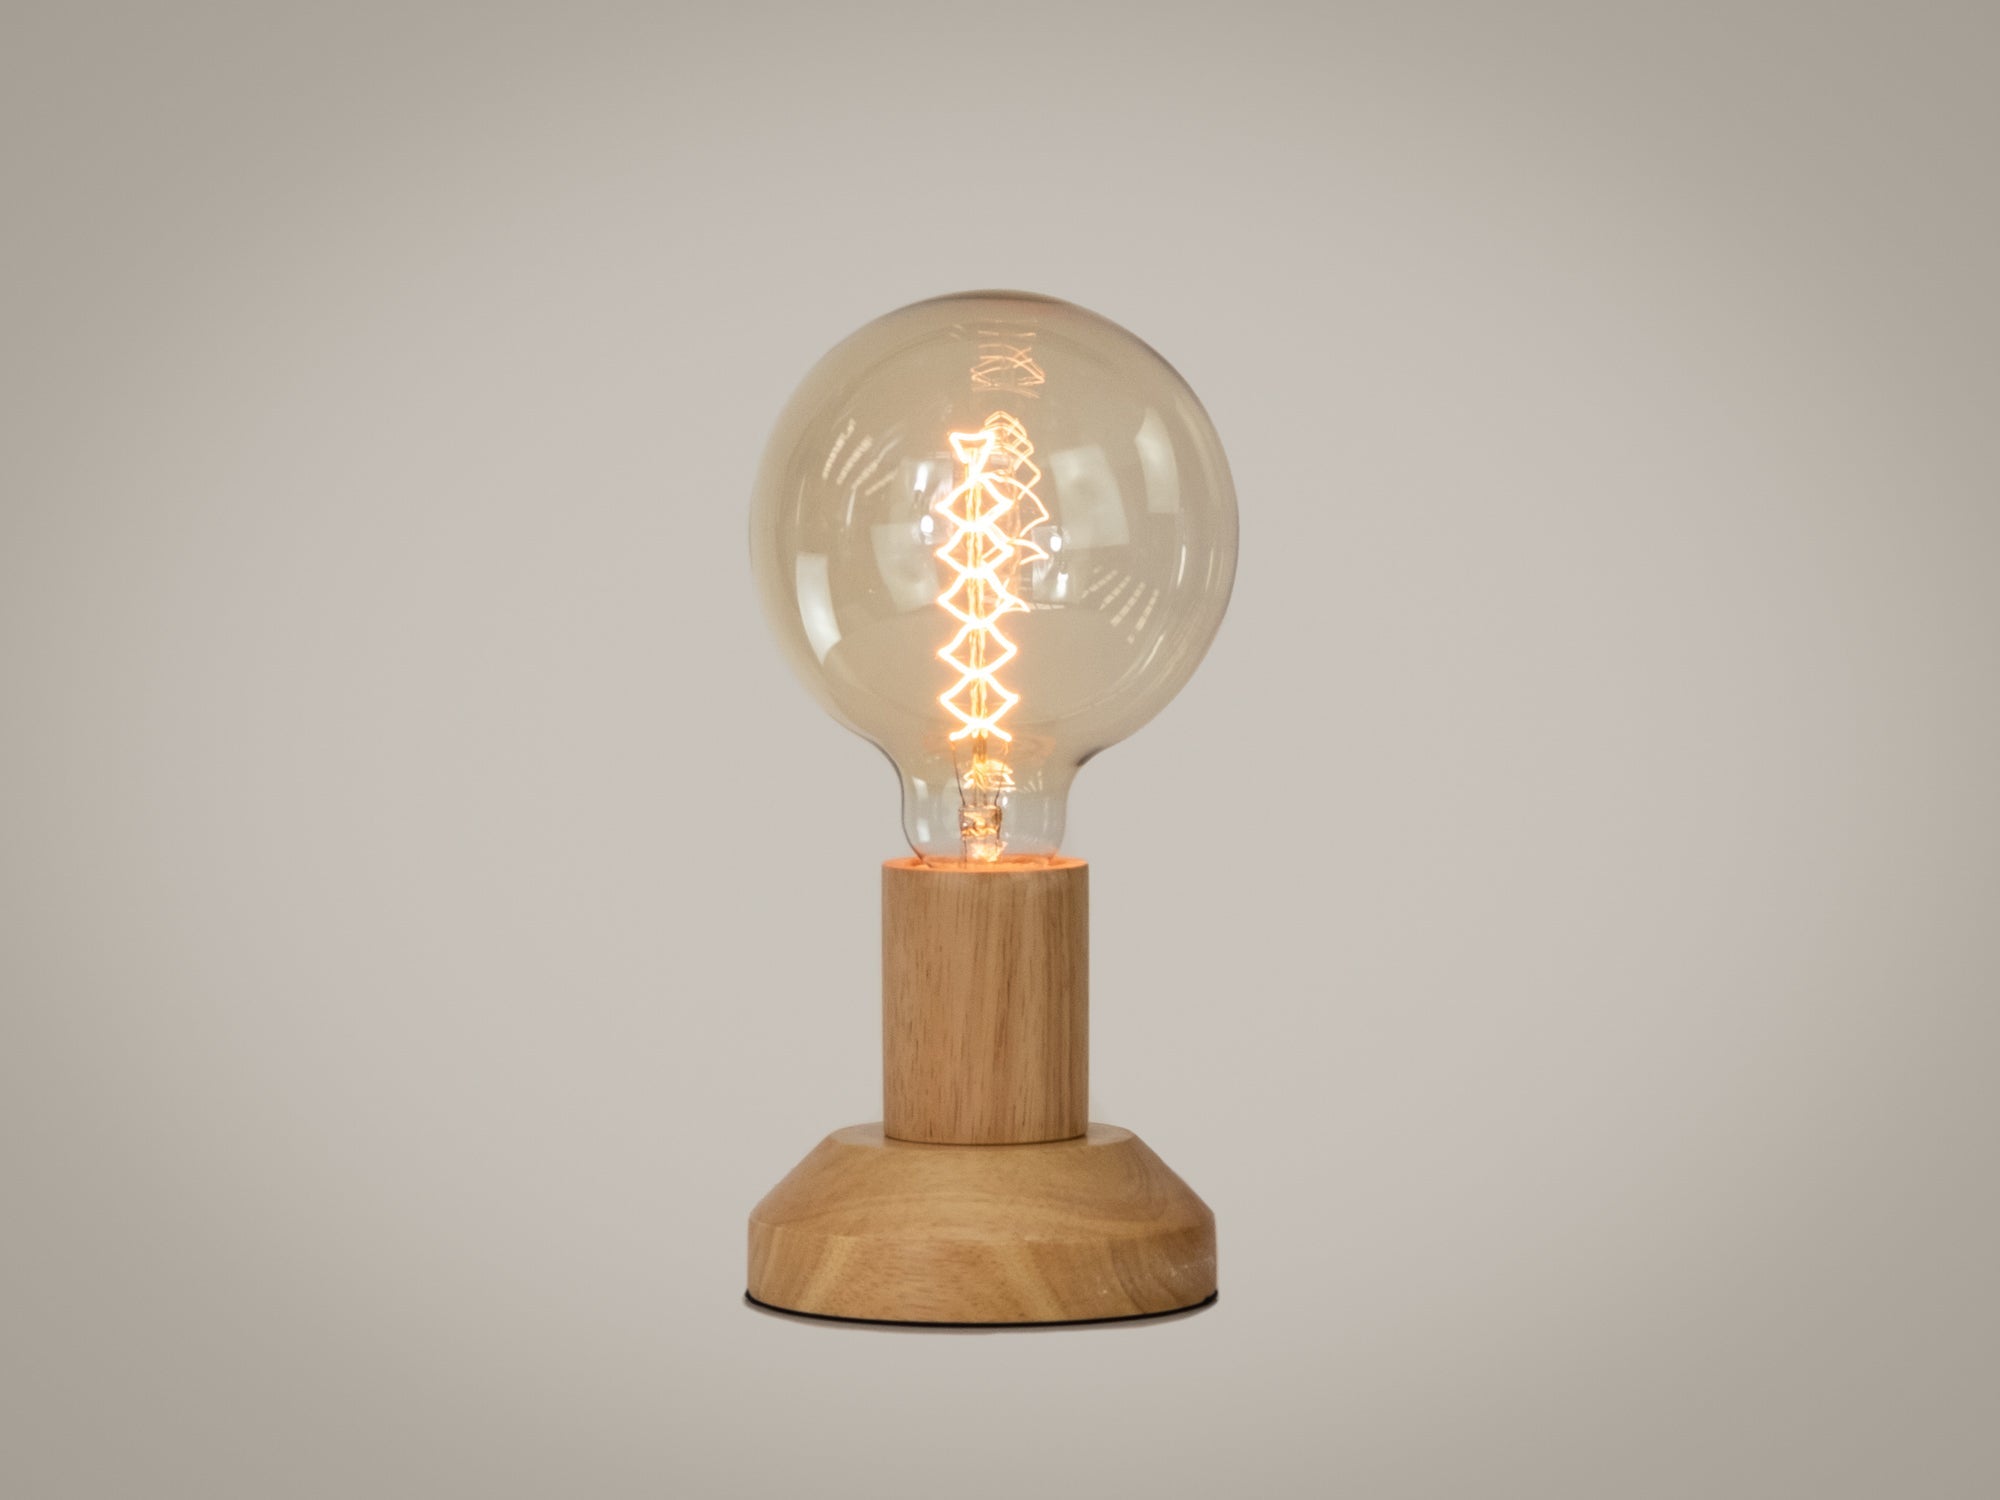 Bambino Bare Bulb Wooden Table Lamp - img5e795d61612eb